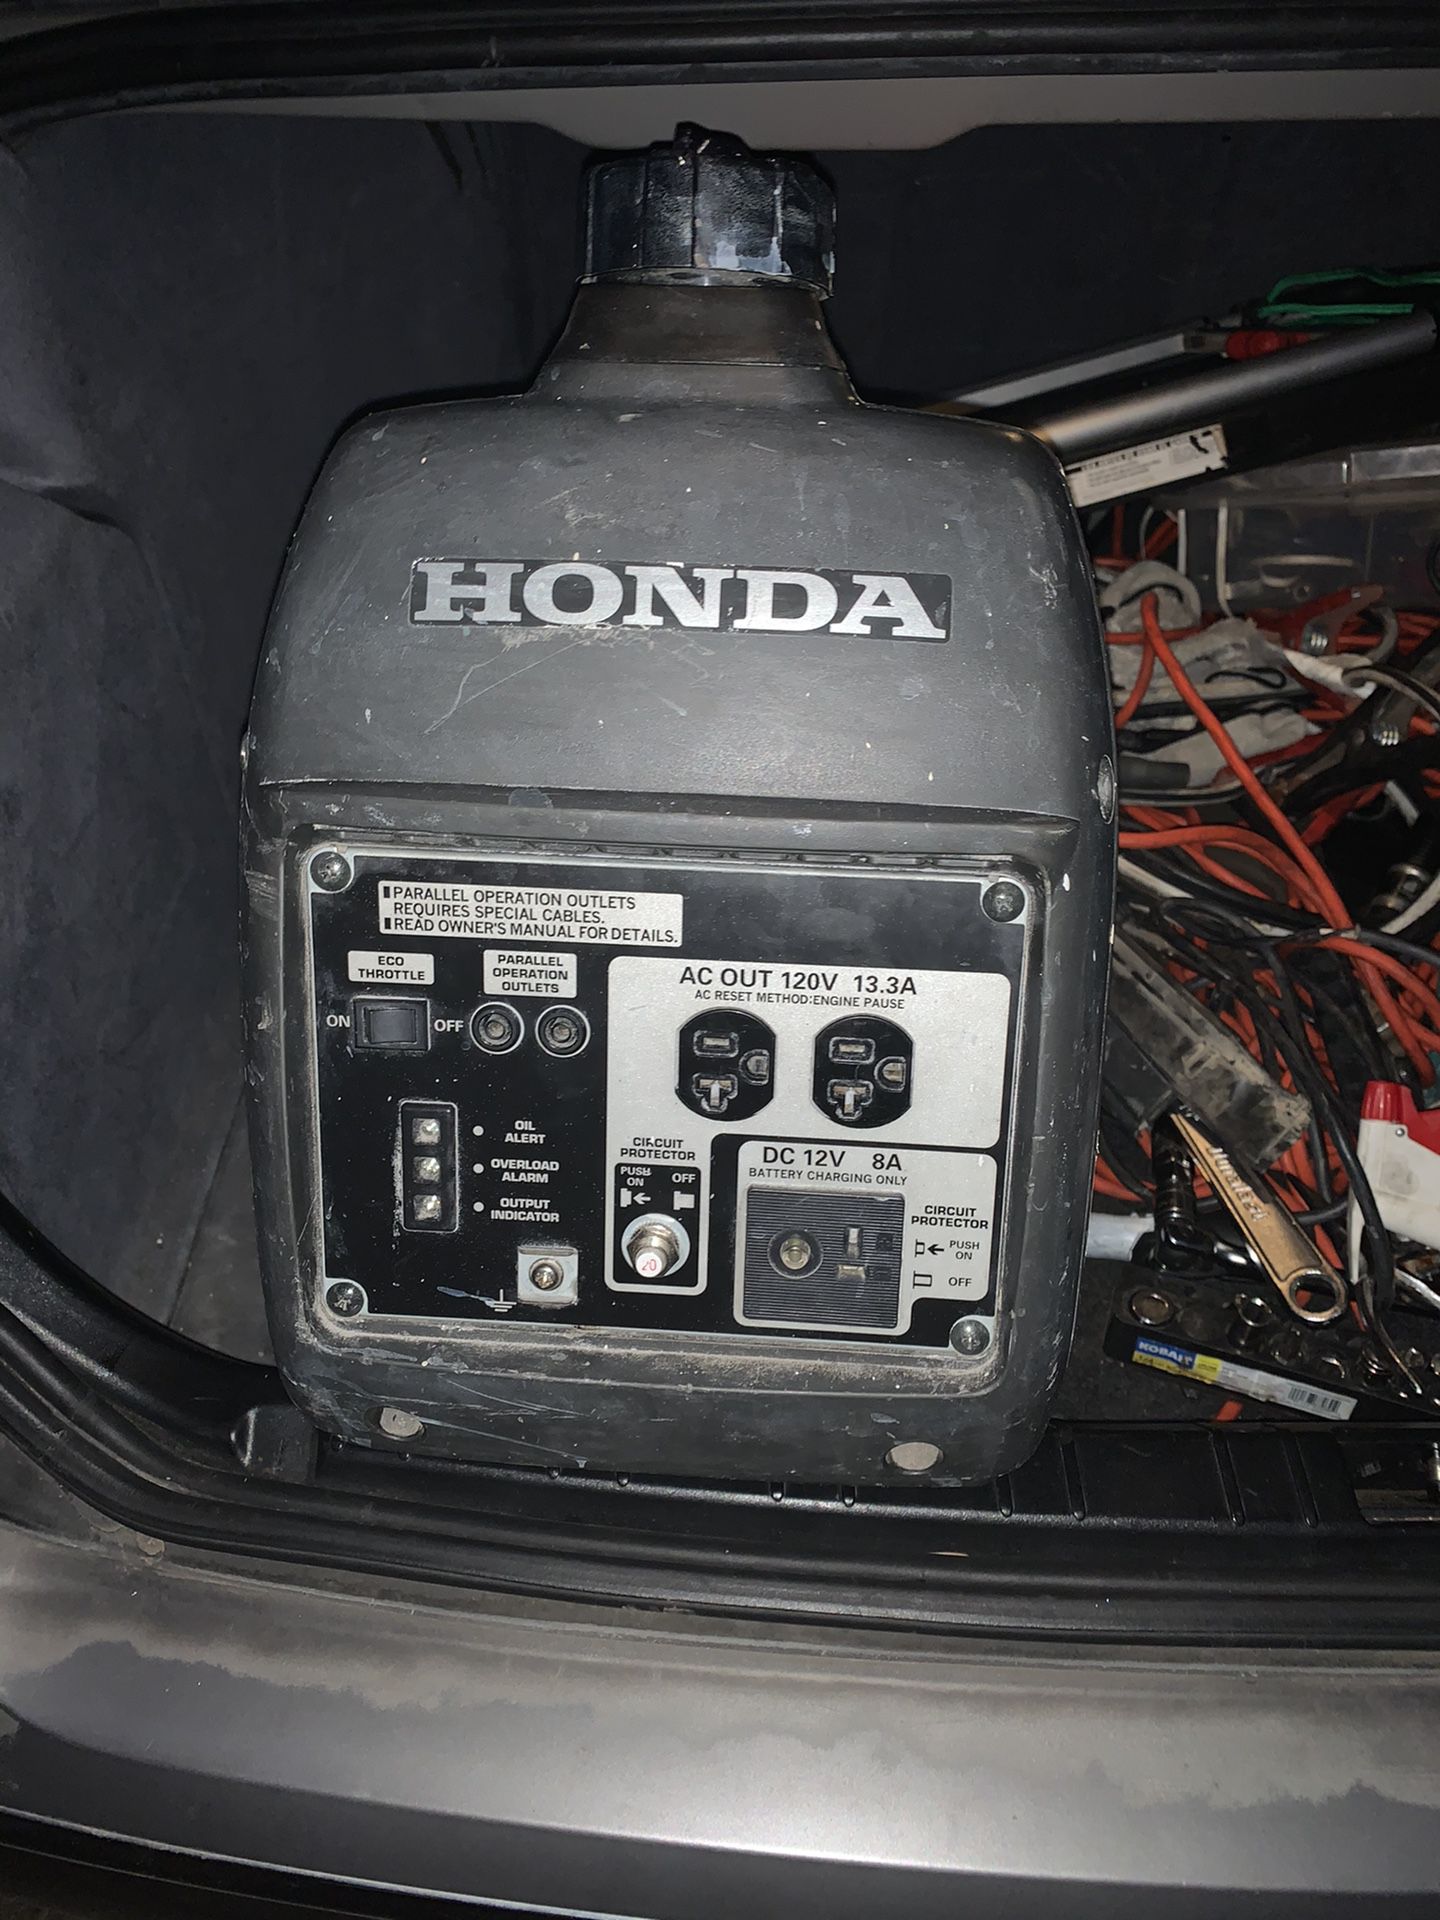 Honda inverter eu2000